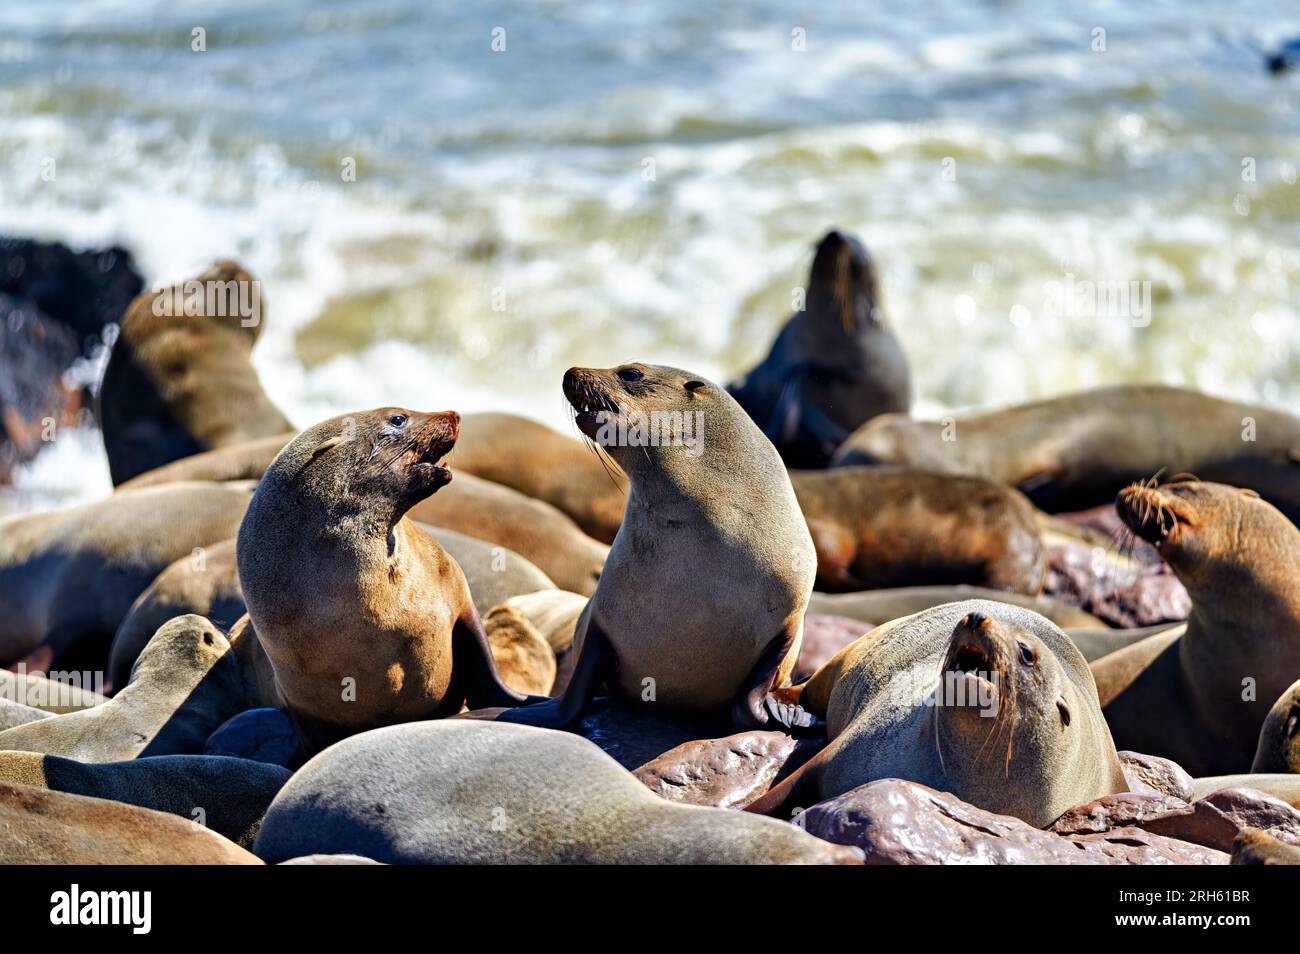 Namibia. Skeleton Coast. Cape fur seal colony at Cape Cross Stock Photo